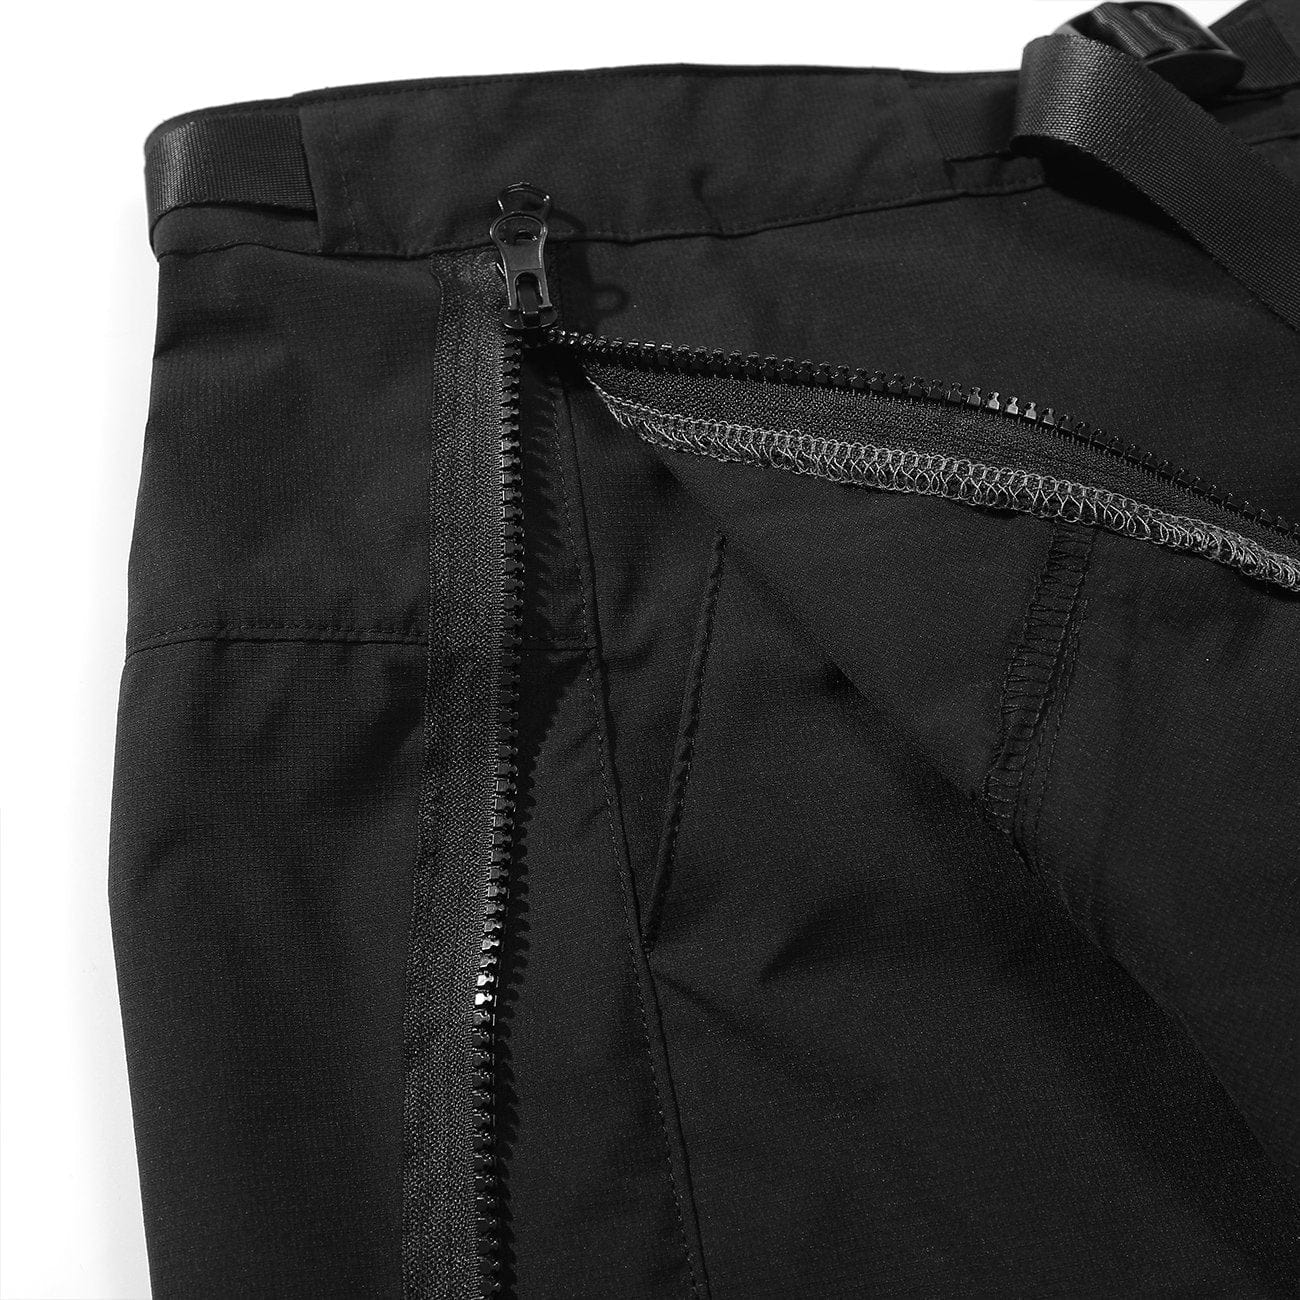 Function Long Zip Up Cargo Shorts Streetwear Brand Techwear Combat Tactical YUGEN THEORY